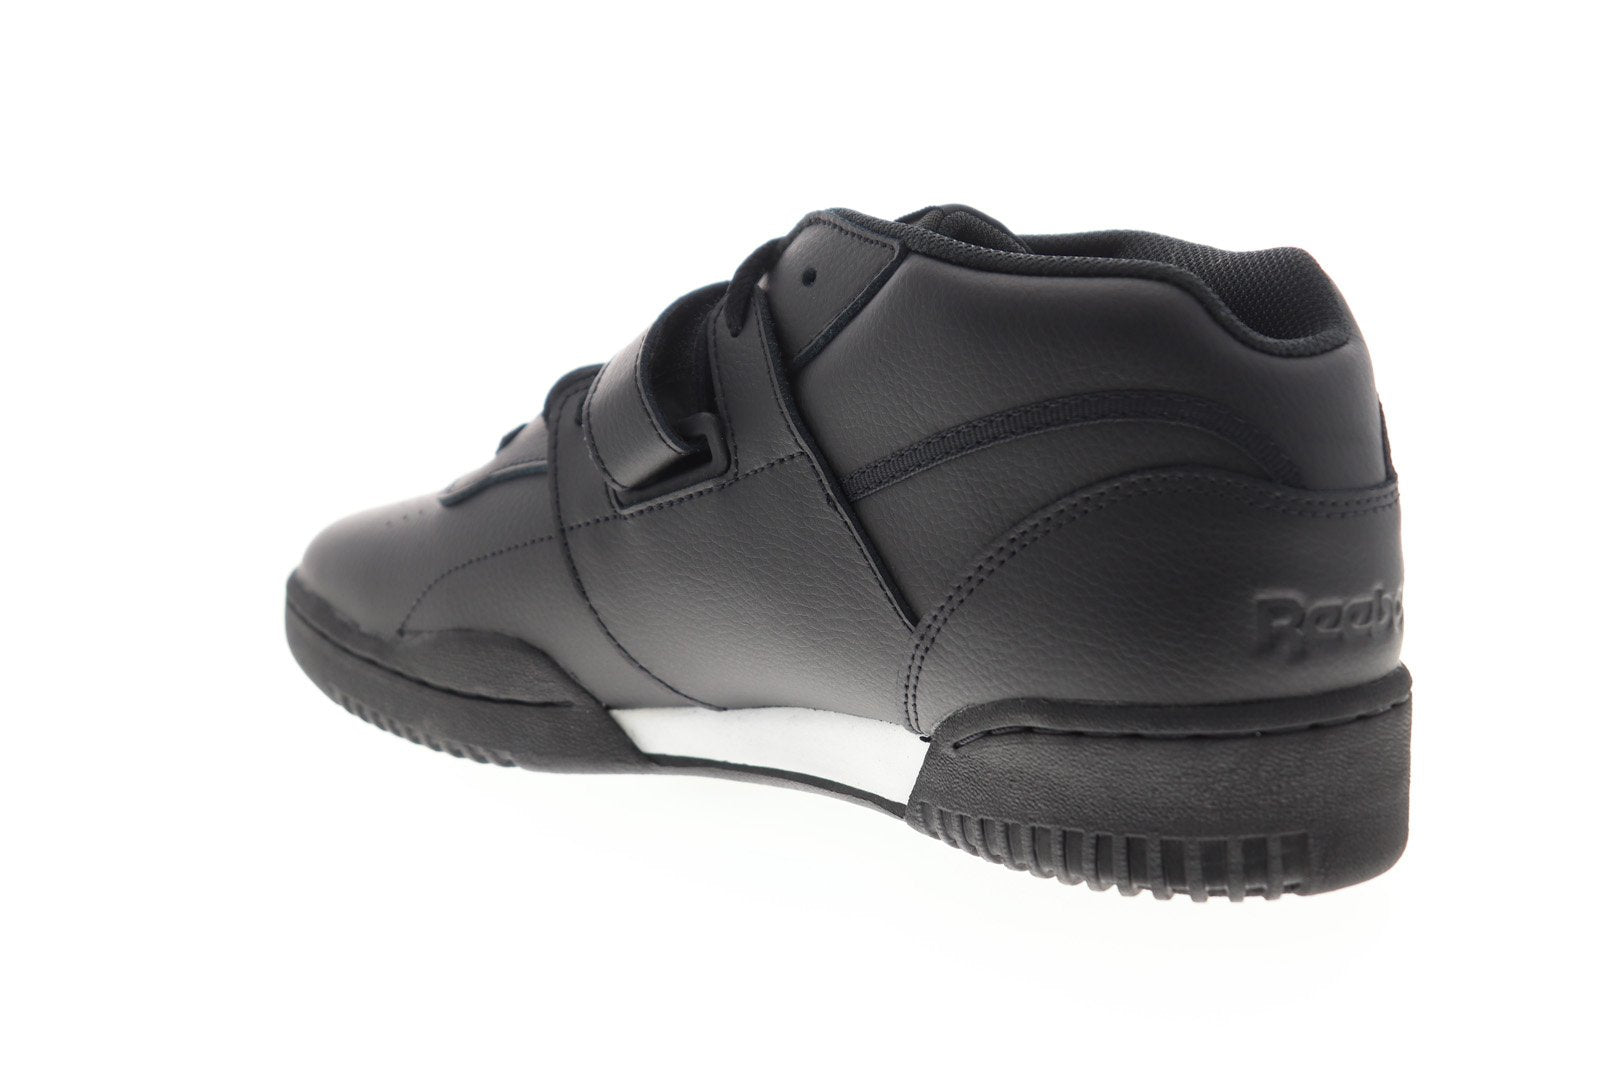 Reebok Workout Clean Mid Strap CN7408 Mens Black Lifestyle - Shoes